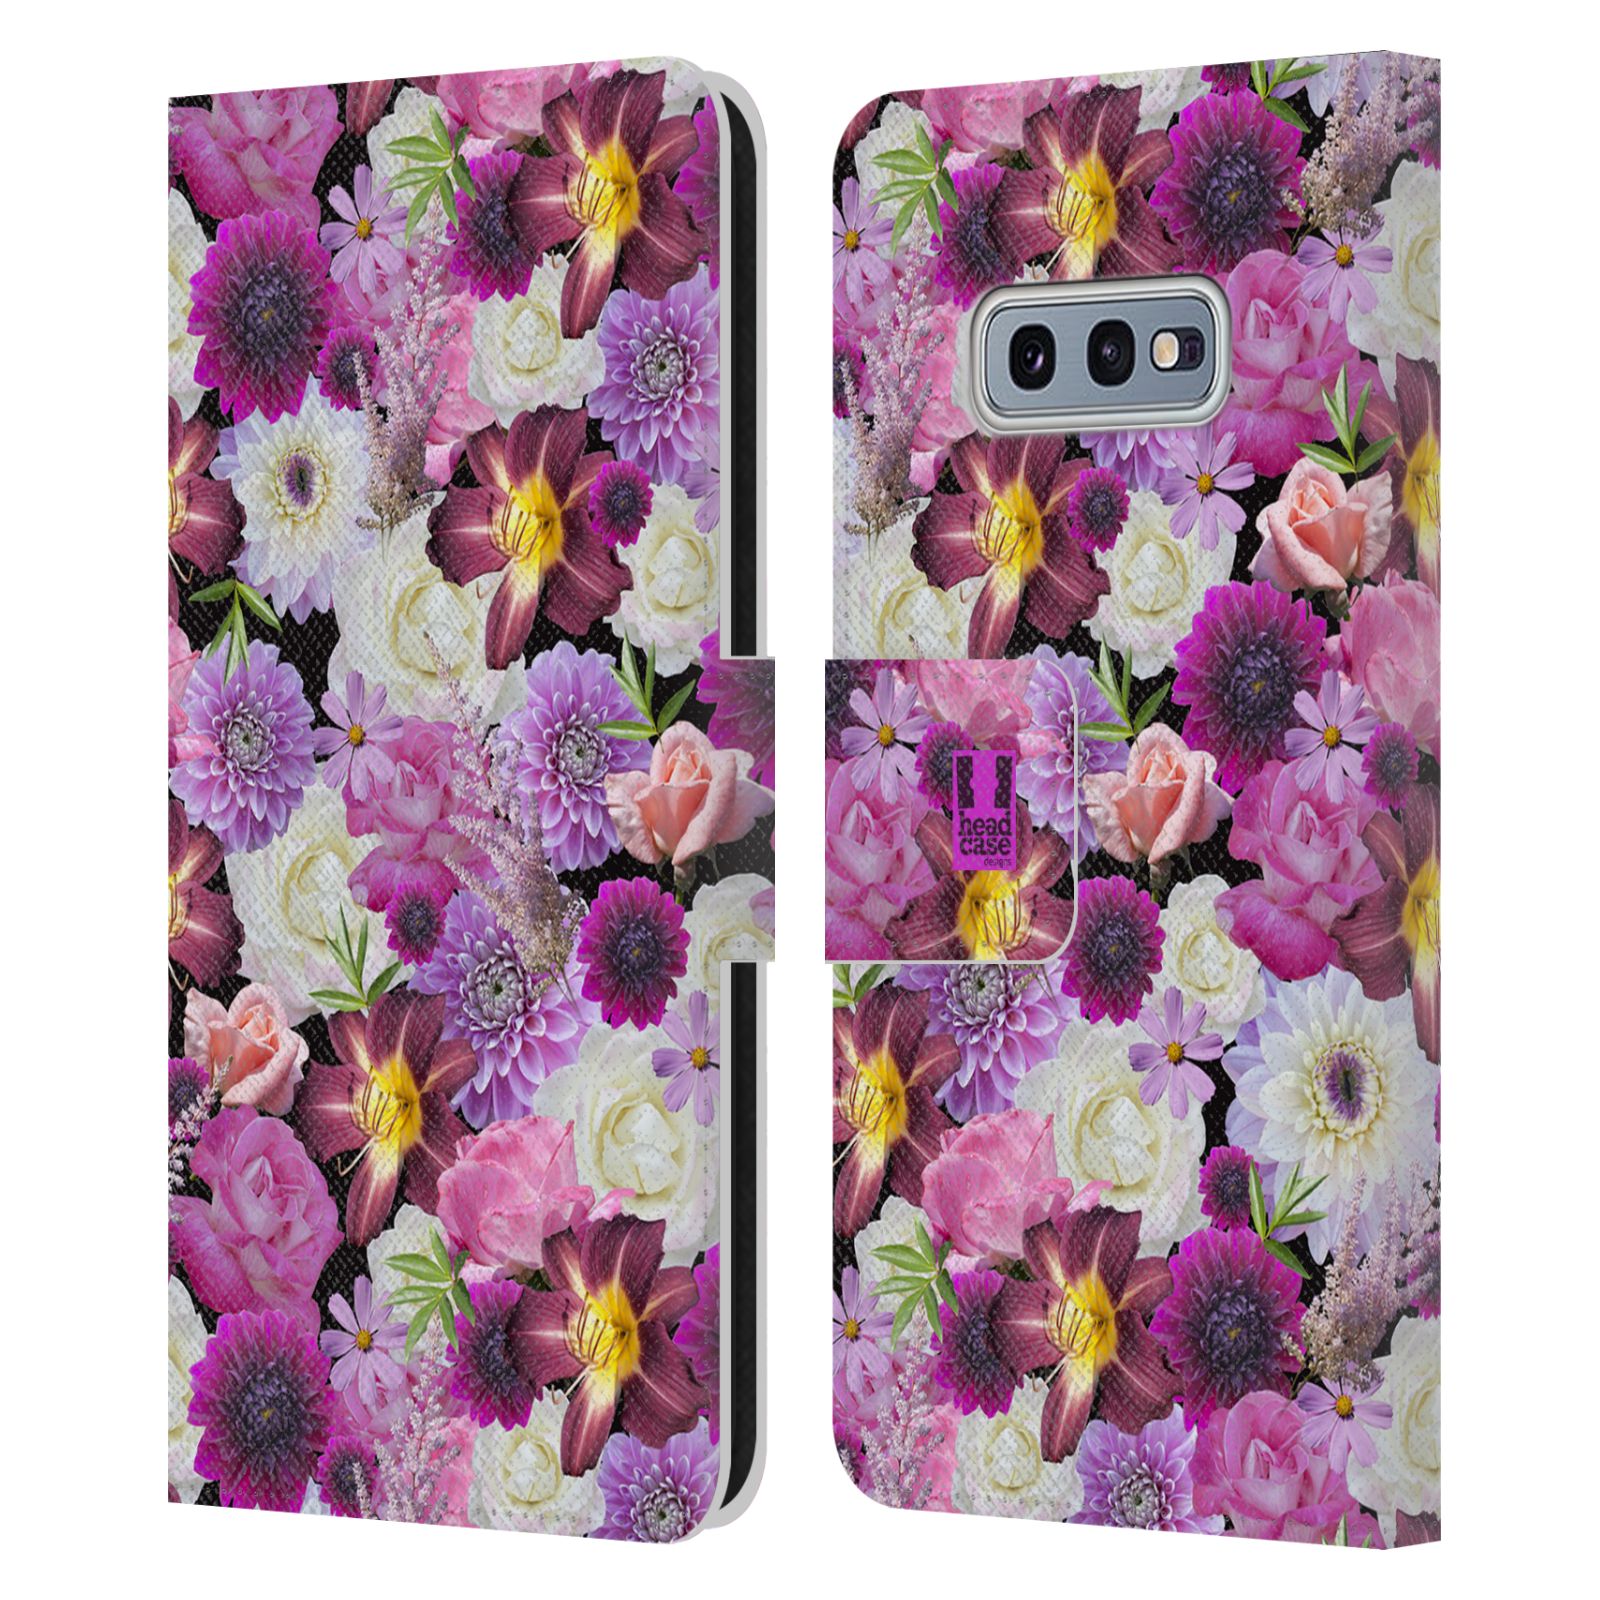 Pouzdro HEAD CASE na mobil Samsung Galaxy S10e květy foto fialová a bílá